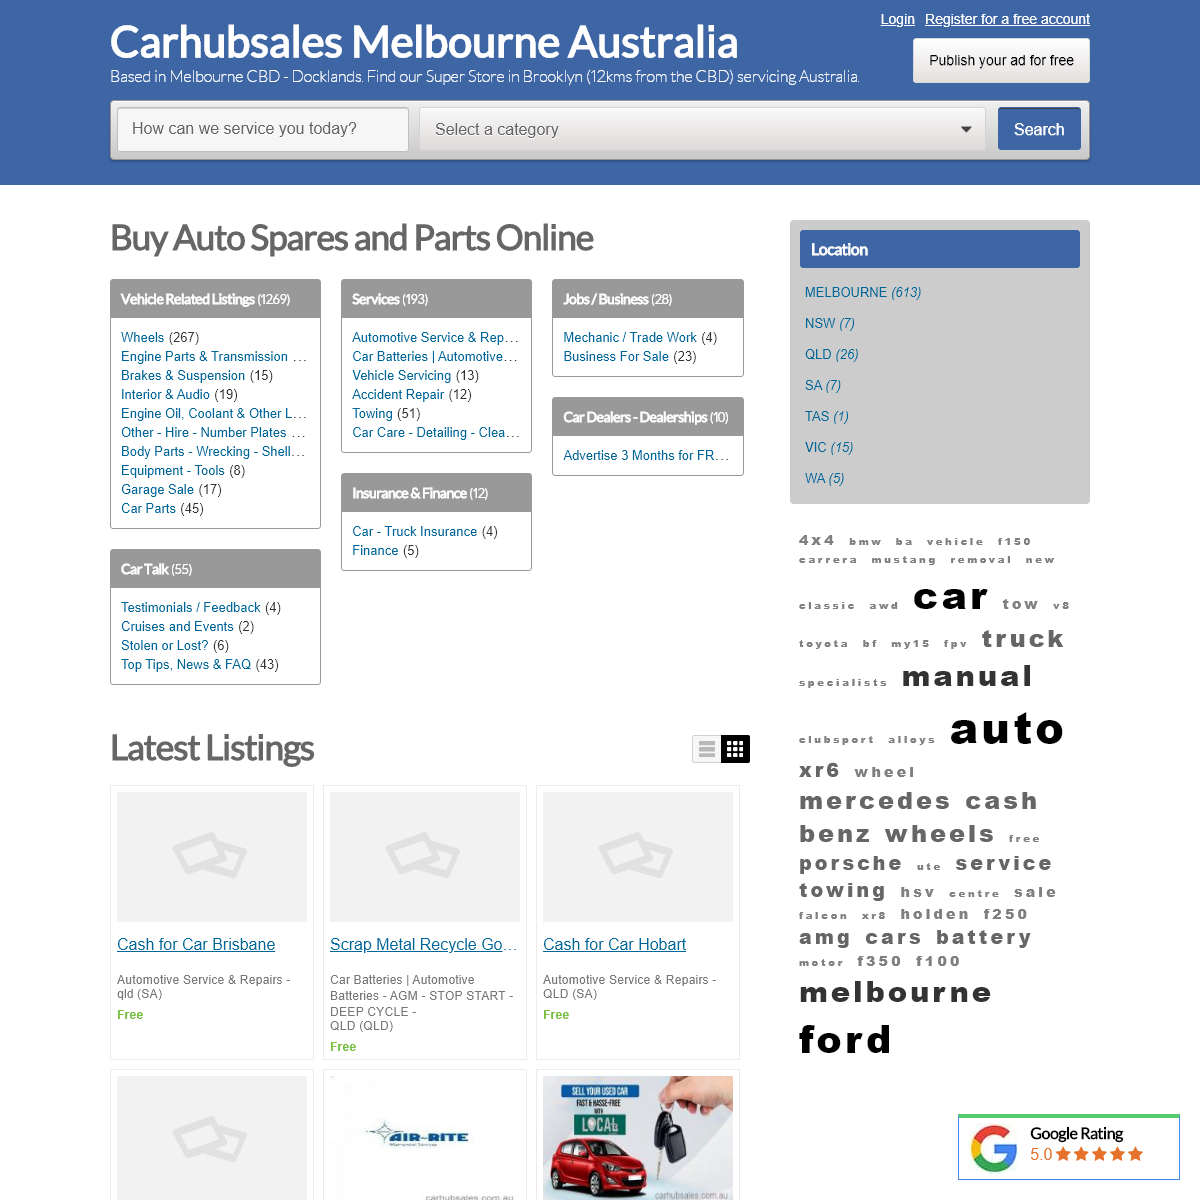 A complete backup of carhubsales.com.au